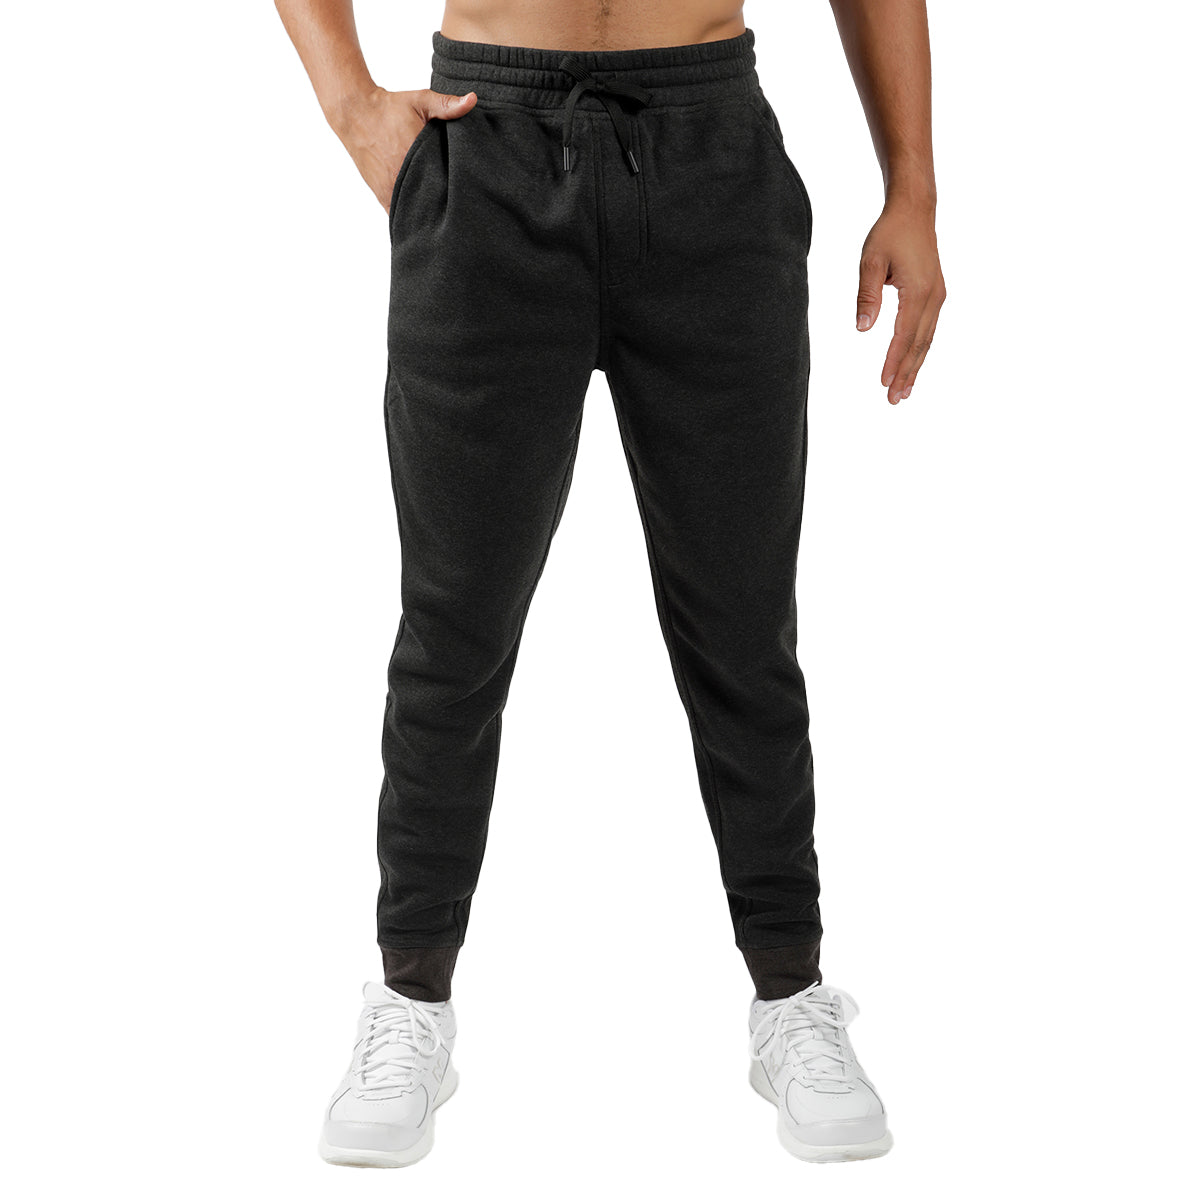 【Size XL]Drawstring Sweatpants Casual Joggers